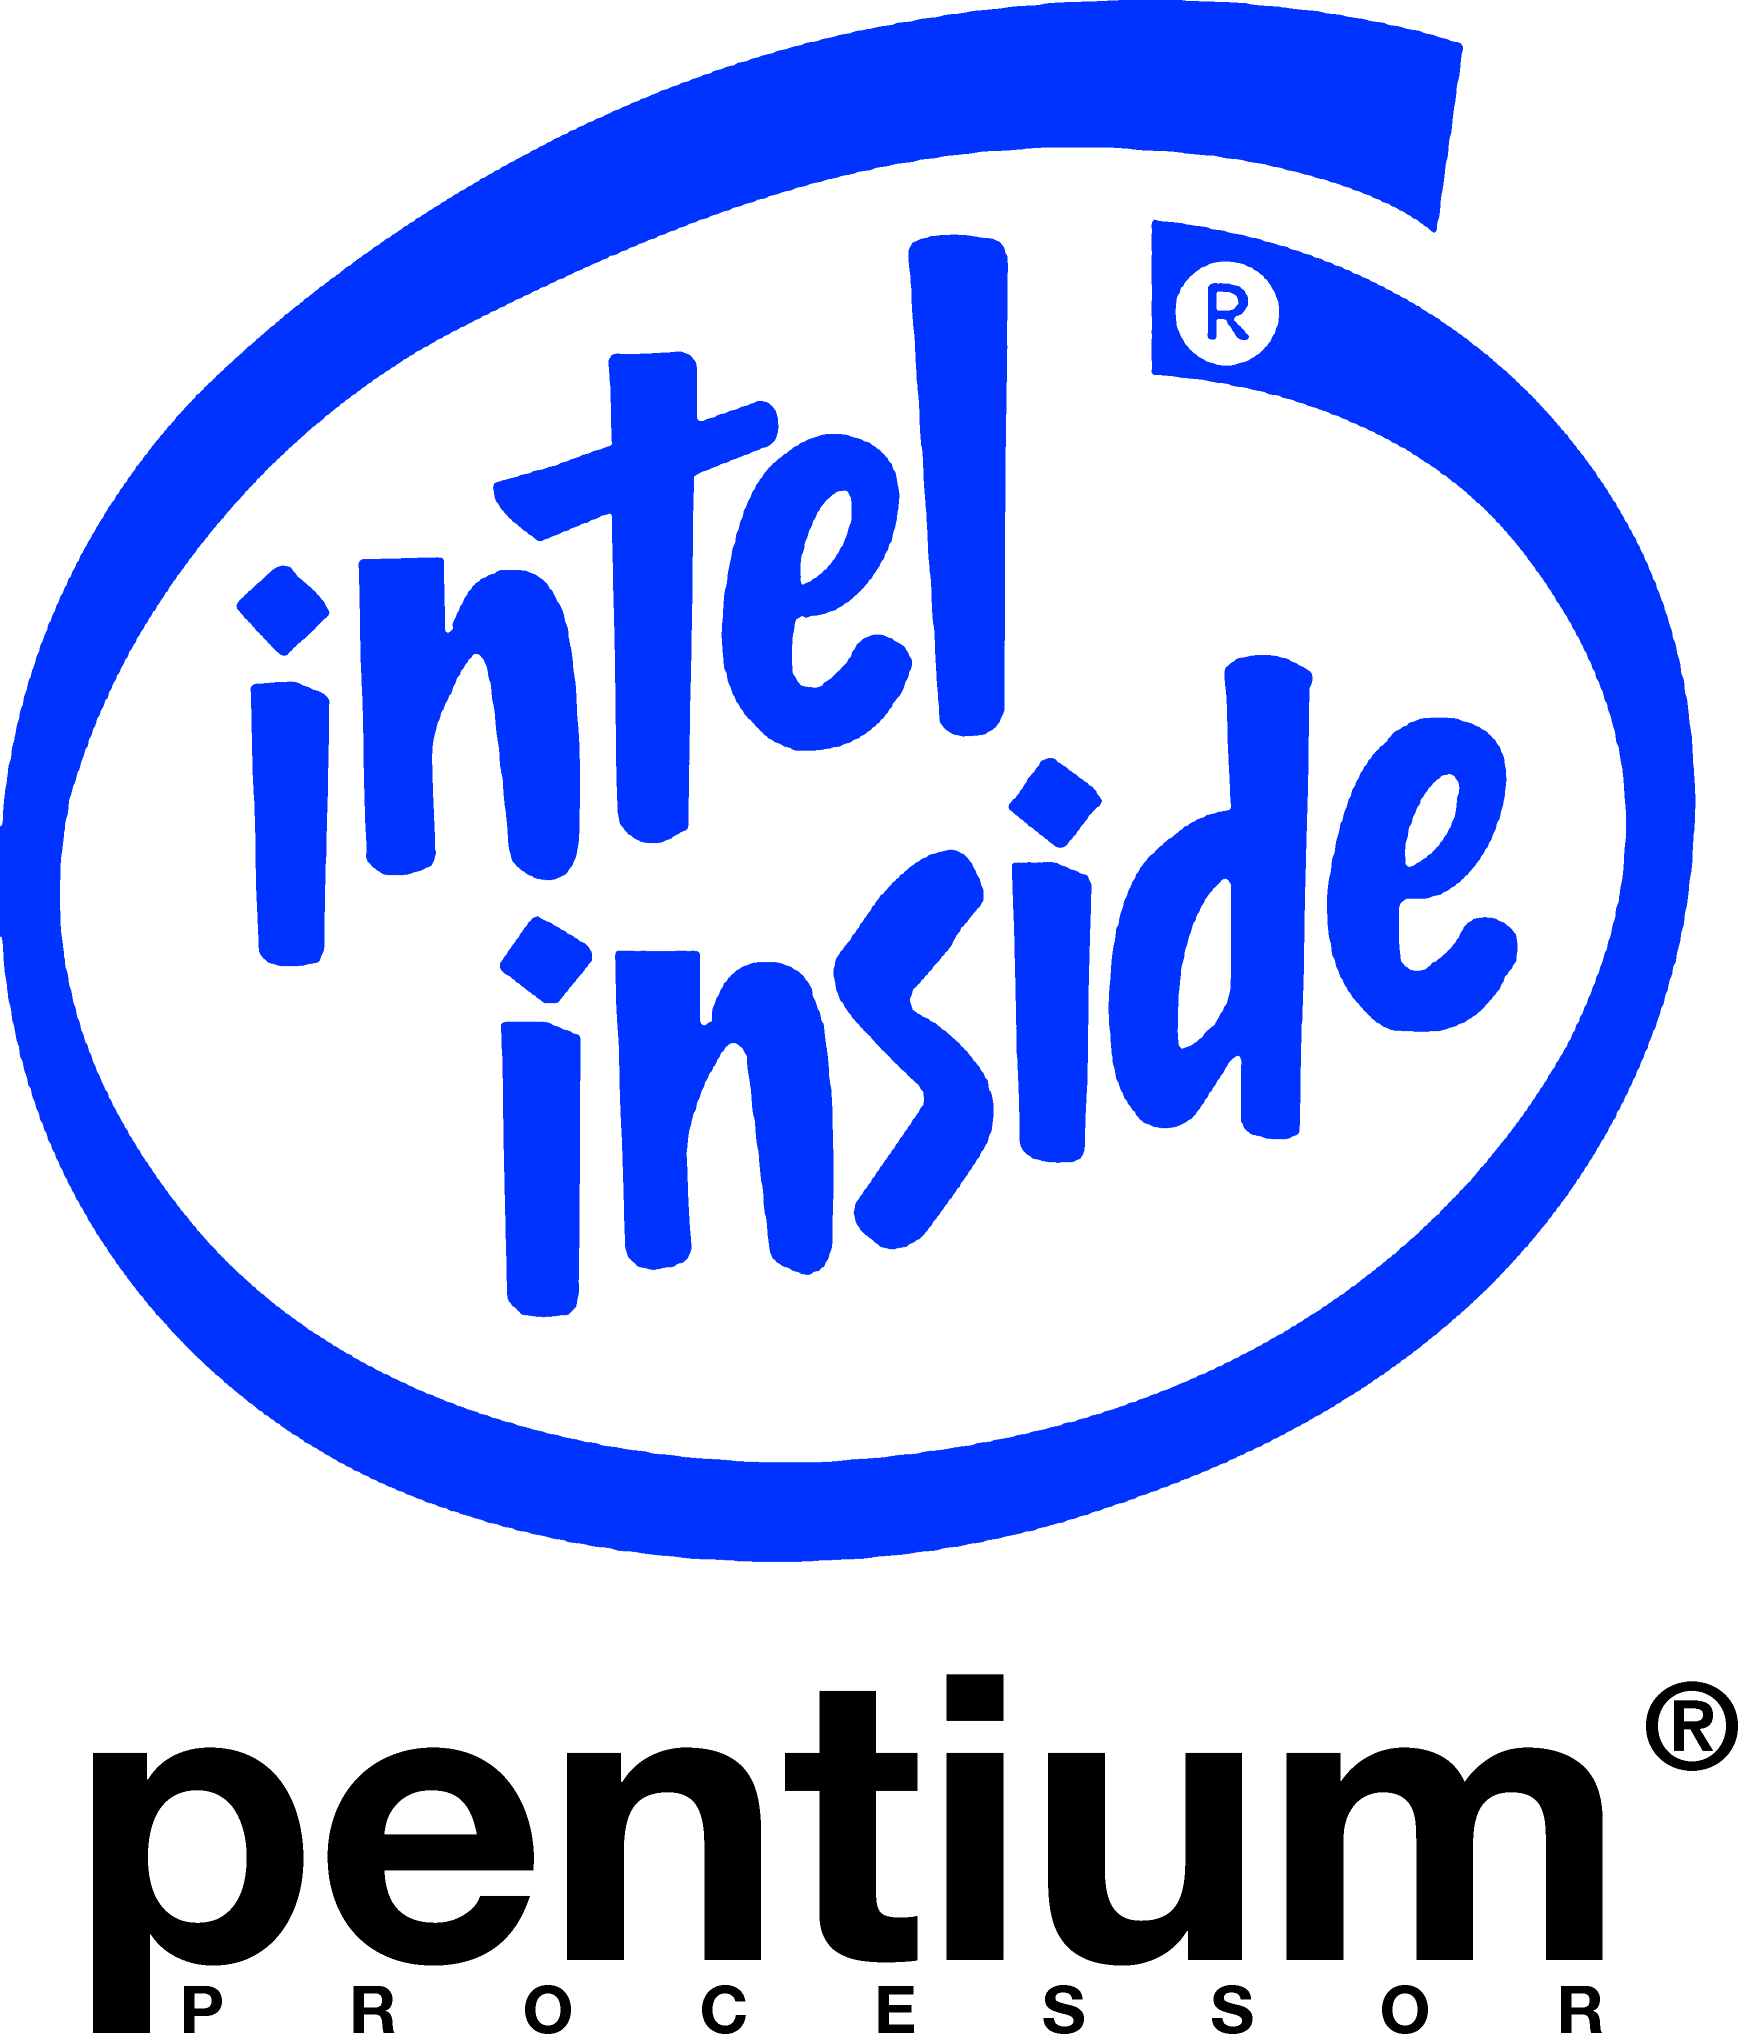 Intel Inside Pentium Logo - Intel Pentium | Logopedia | FANDOM powered by Wikia